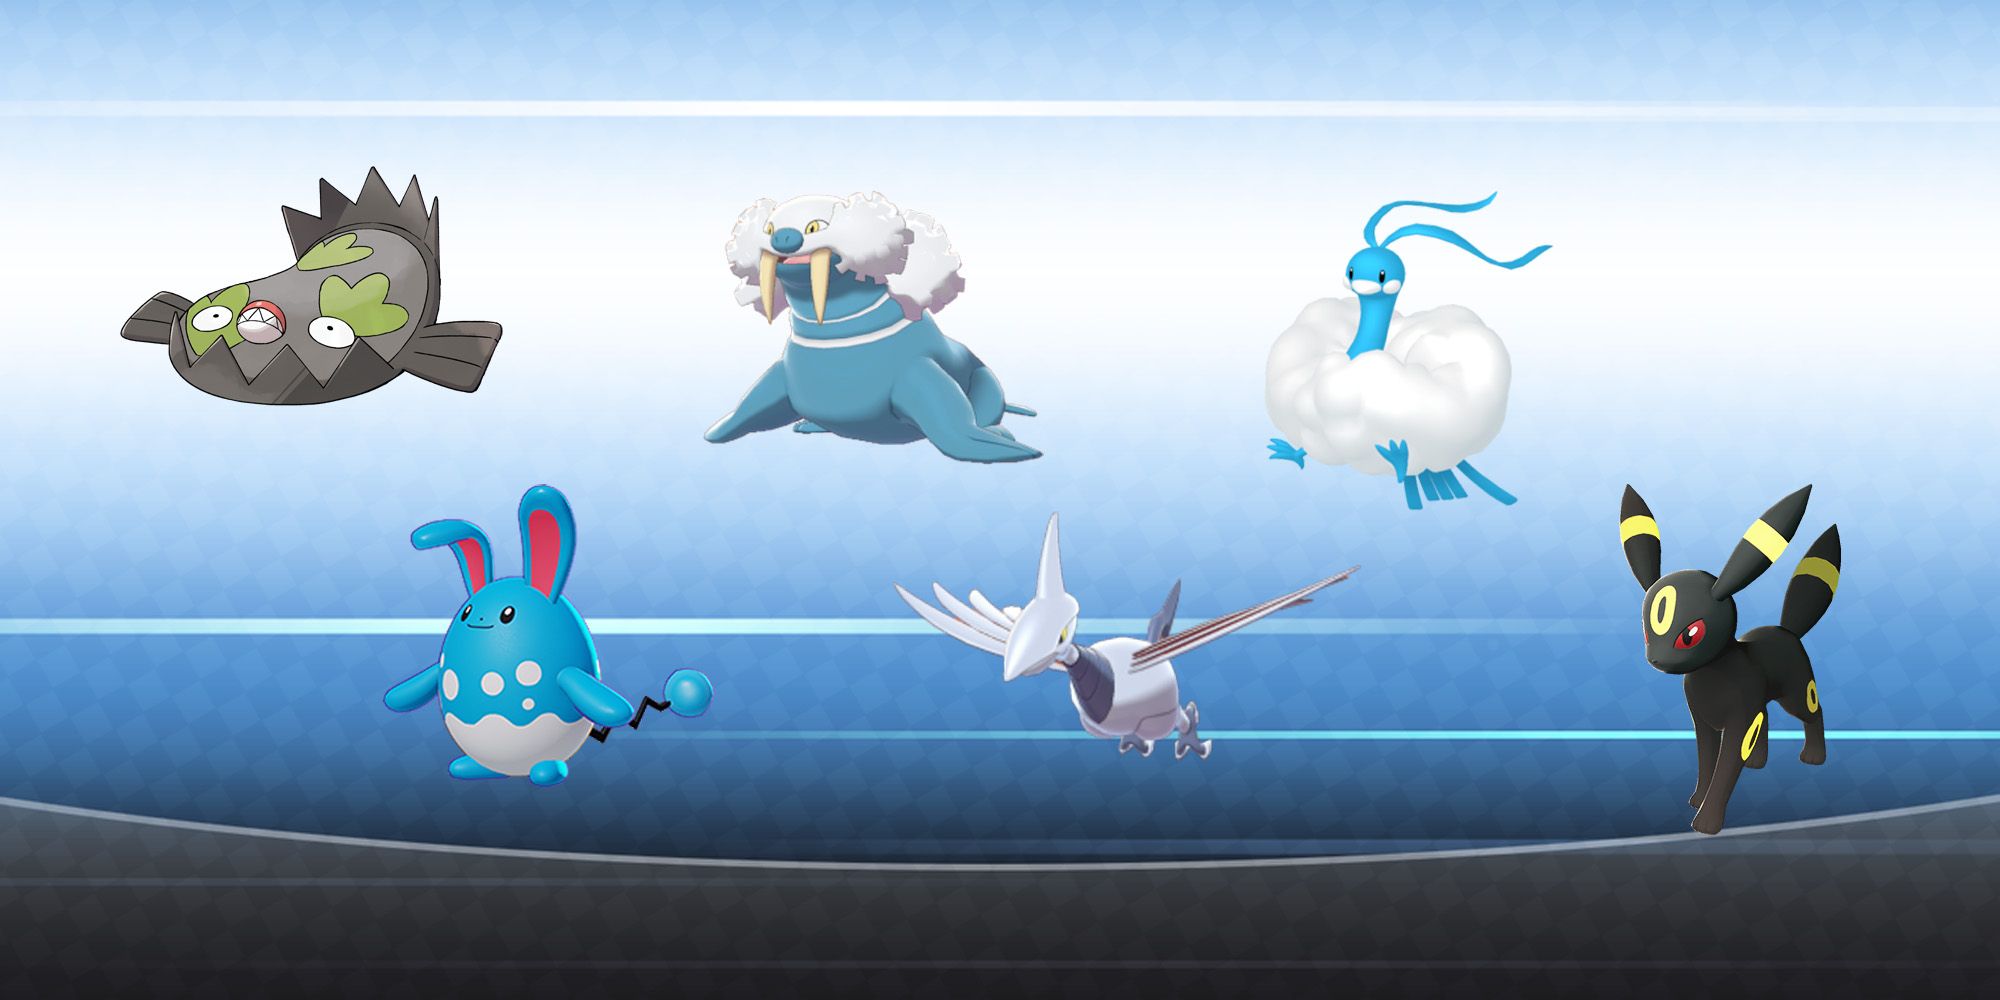 Best Team Compositions For the Season 11 Great League in Pokémon GO